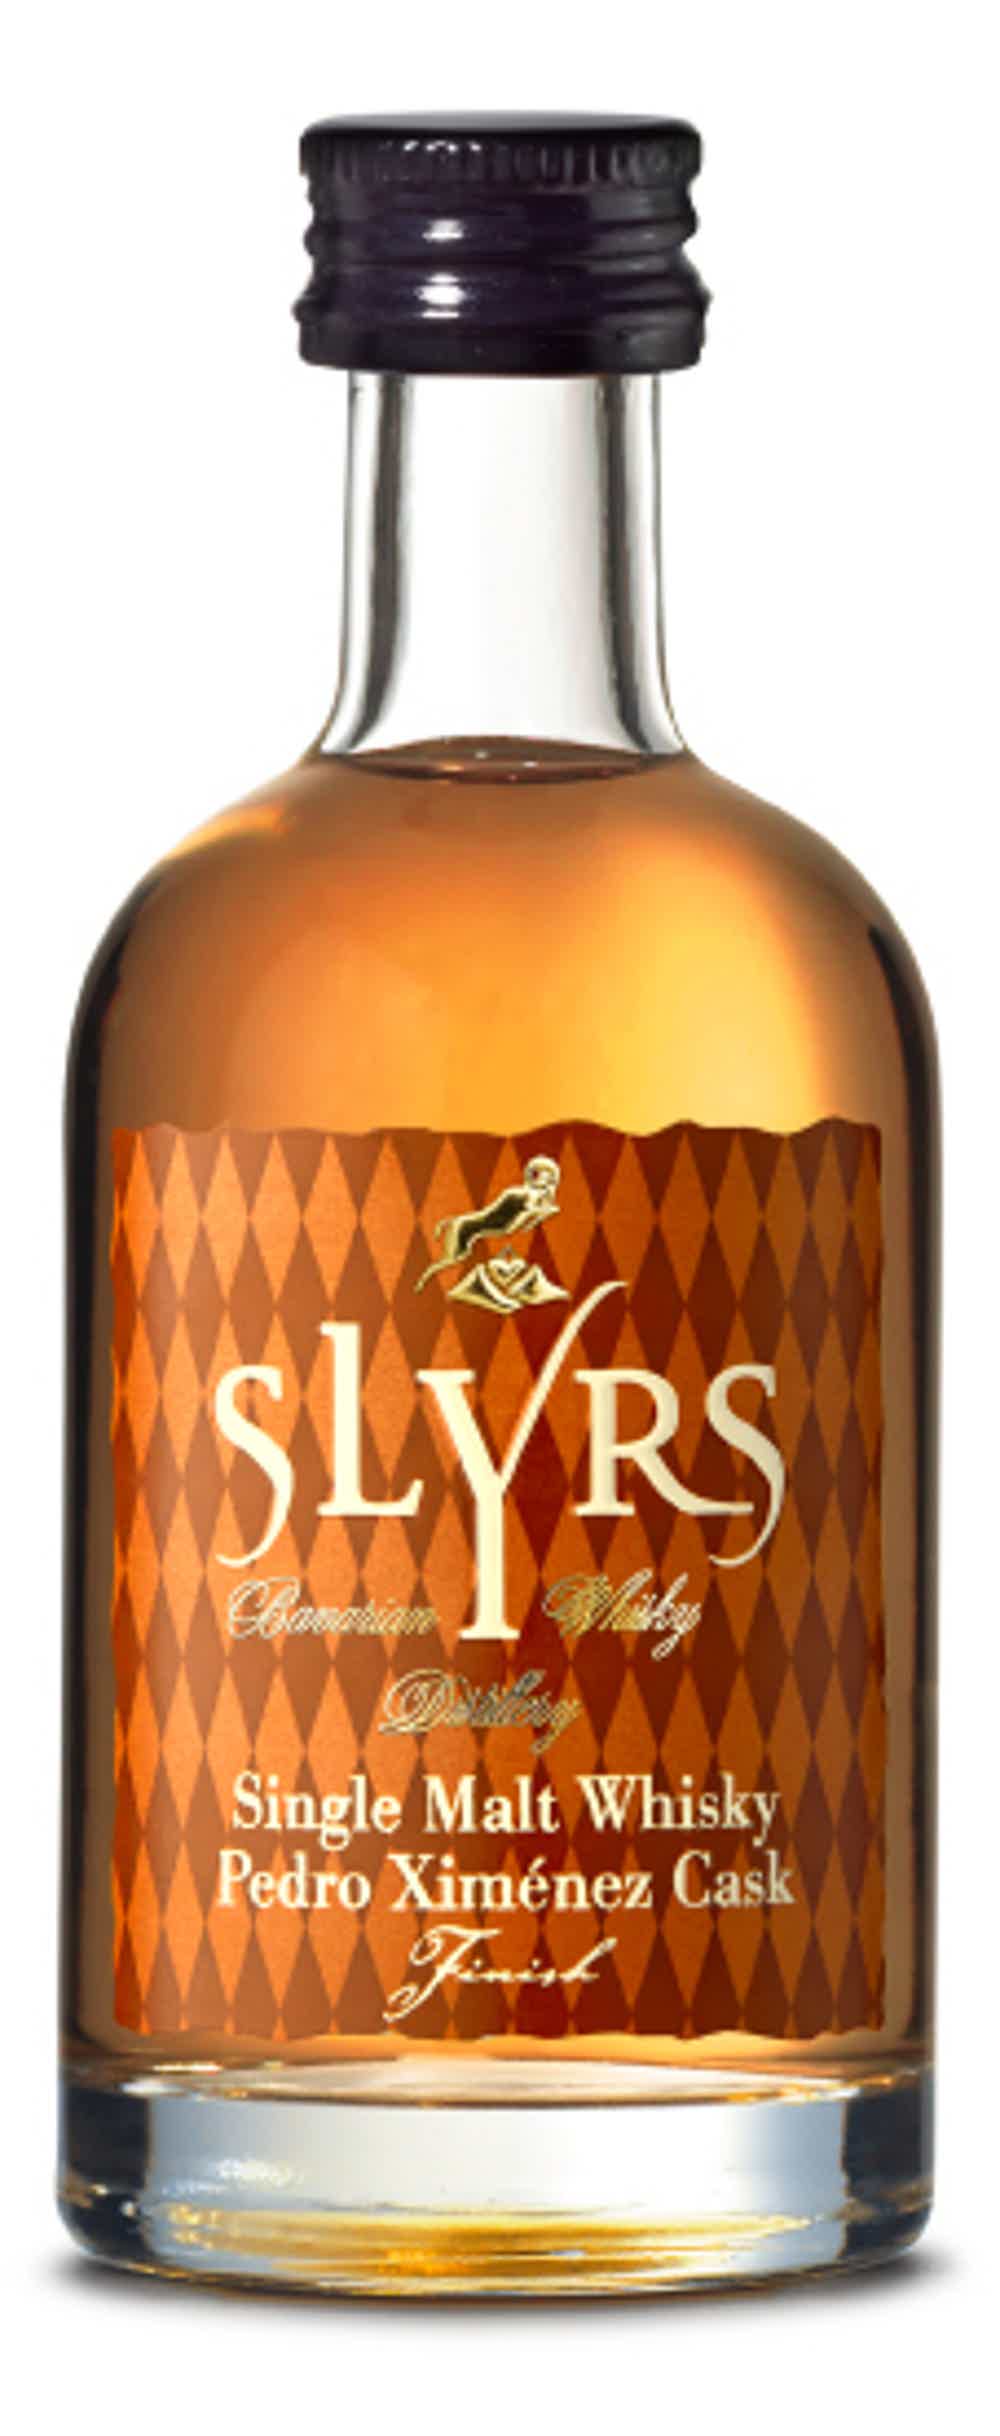 SLYRS Single Malt Whisky Pedro Ximénez Cask Finish 46% vol. 46.0% 0.05L, Spirits